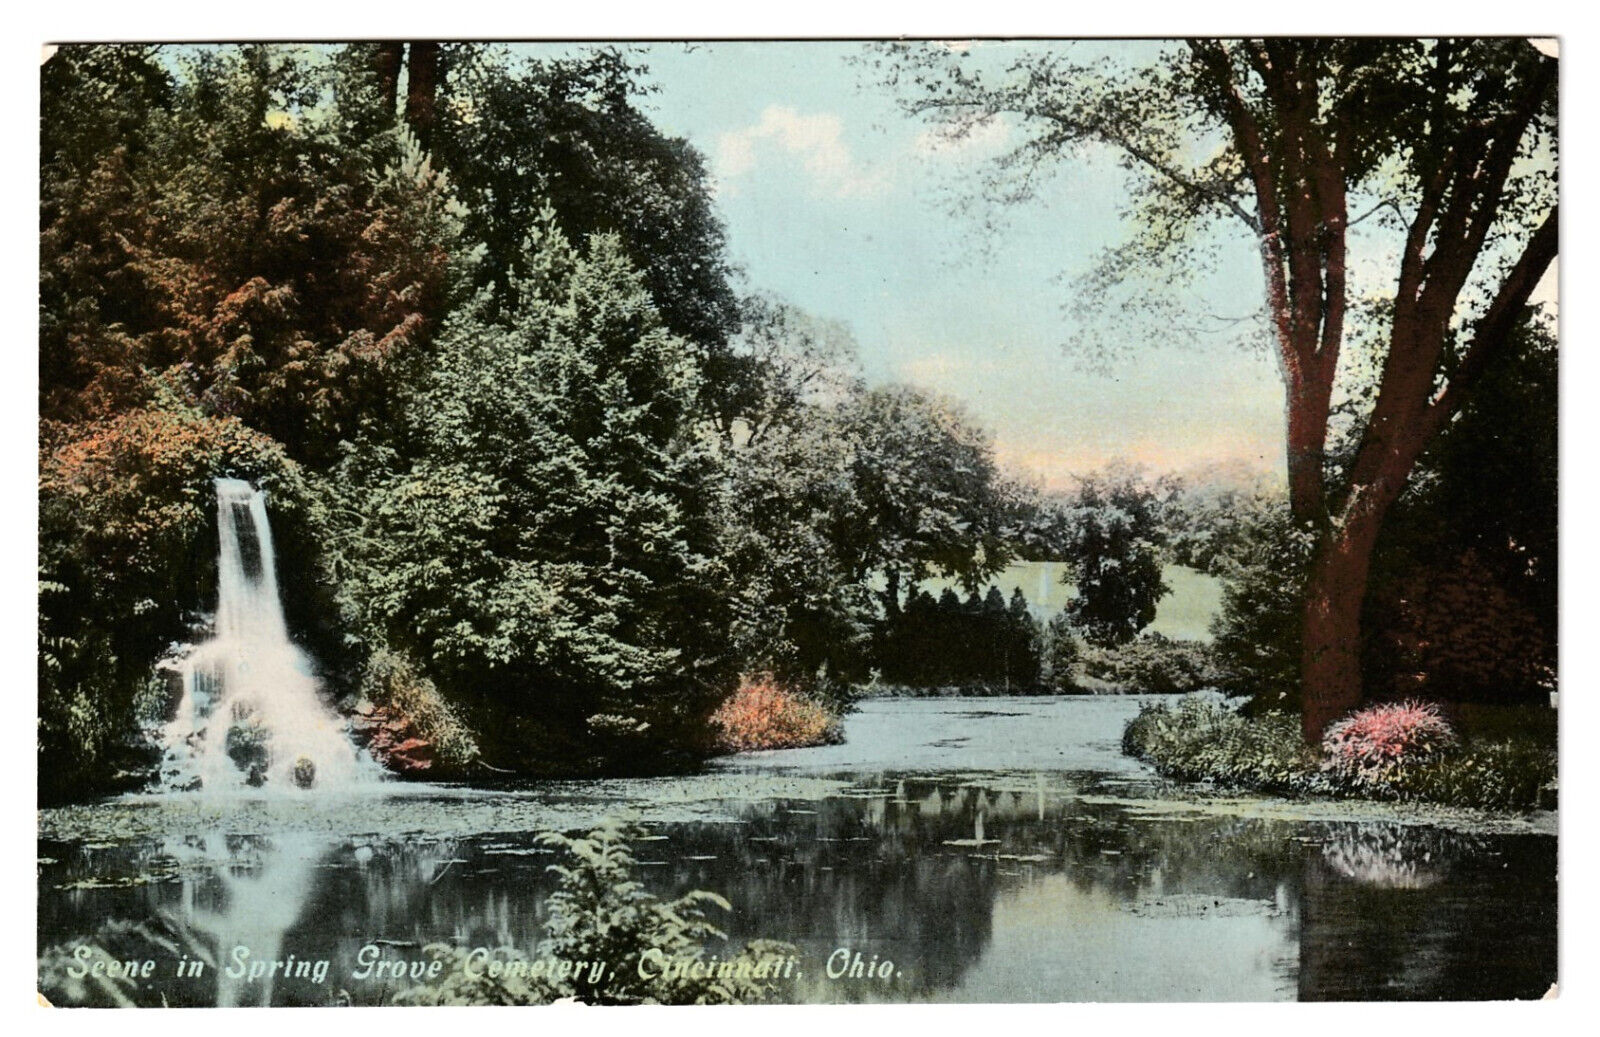 Cincinnati Ohio SPRING GROVE CEMETERY Waterfall Vintage Postcard Landscape Scene